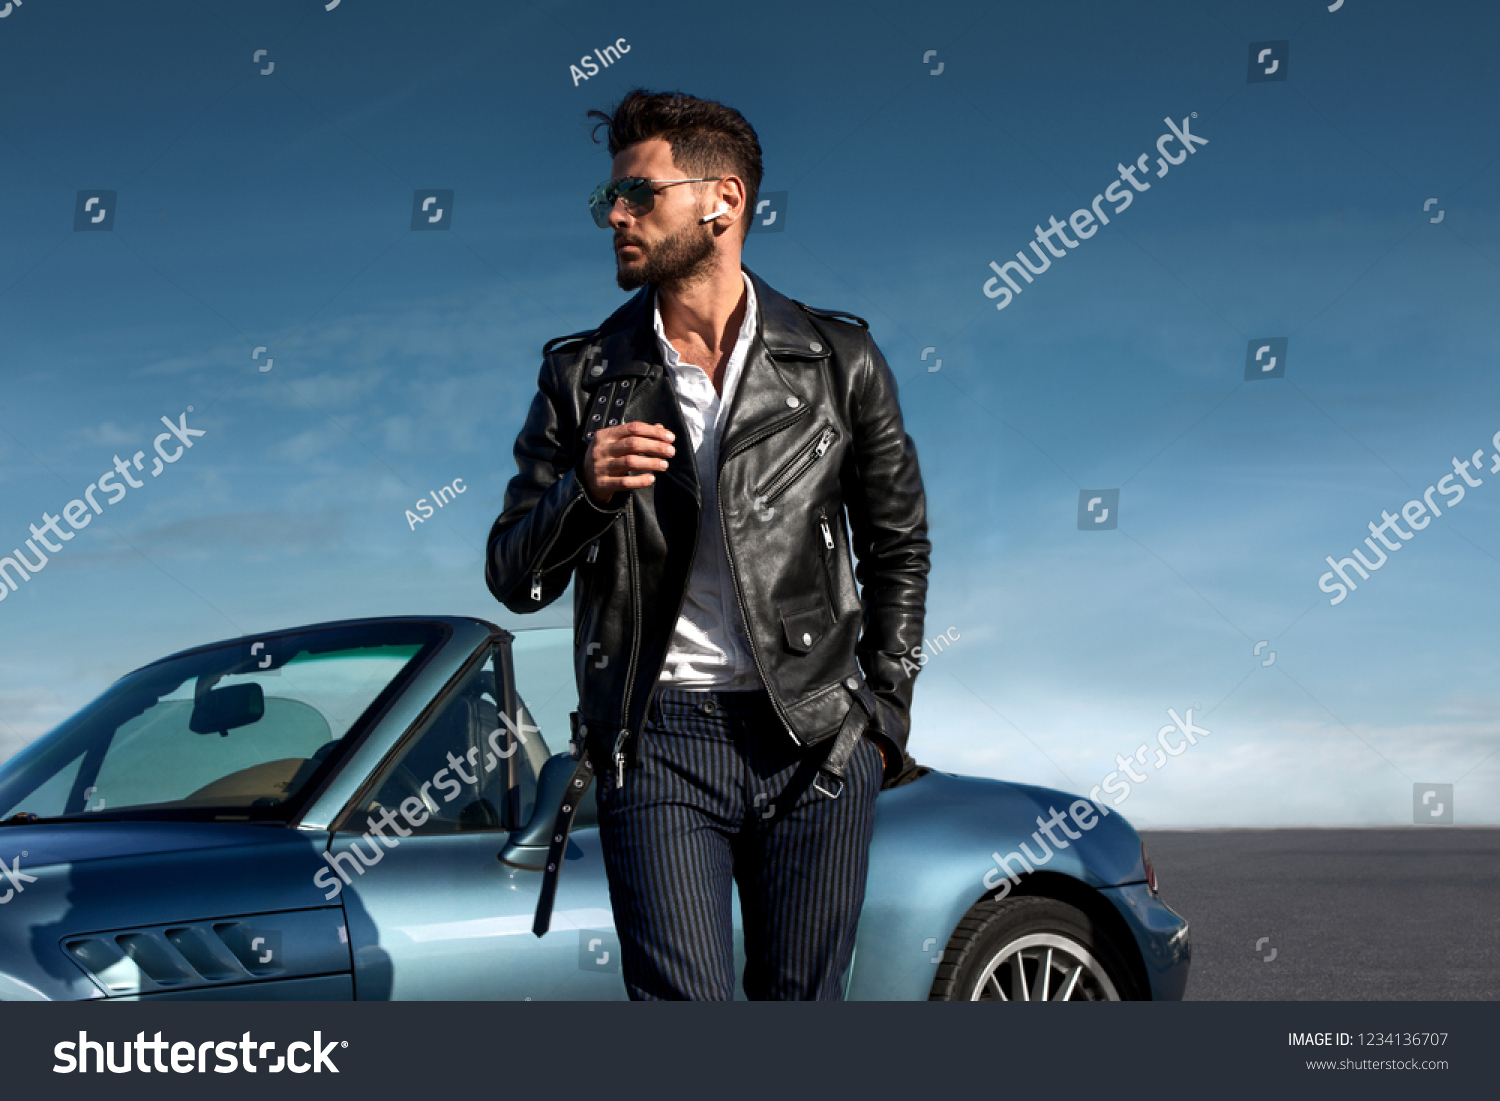 89,546 Men in leather jackets Images, Stock Photos & Vectors | Shutterstock